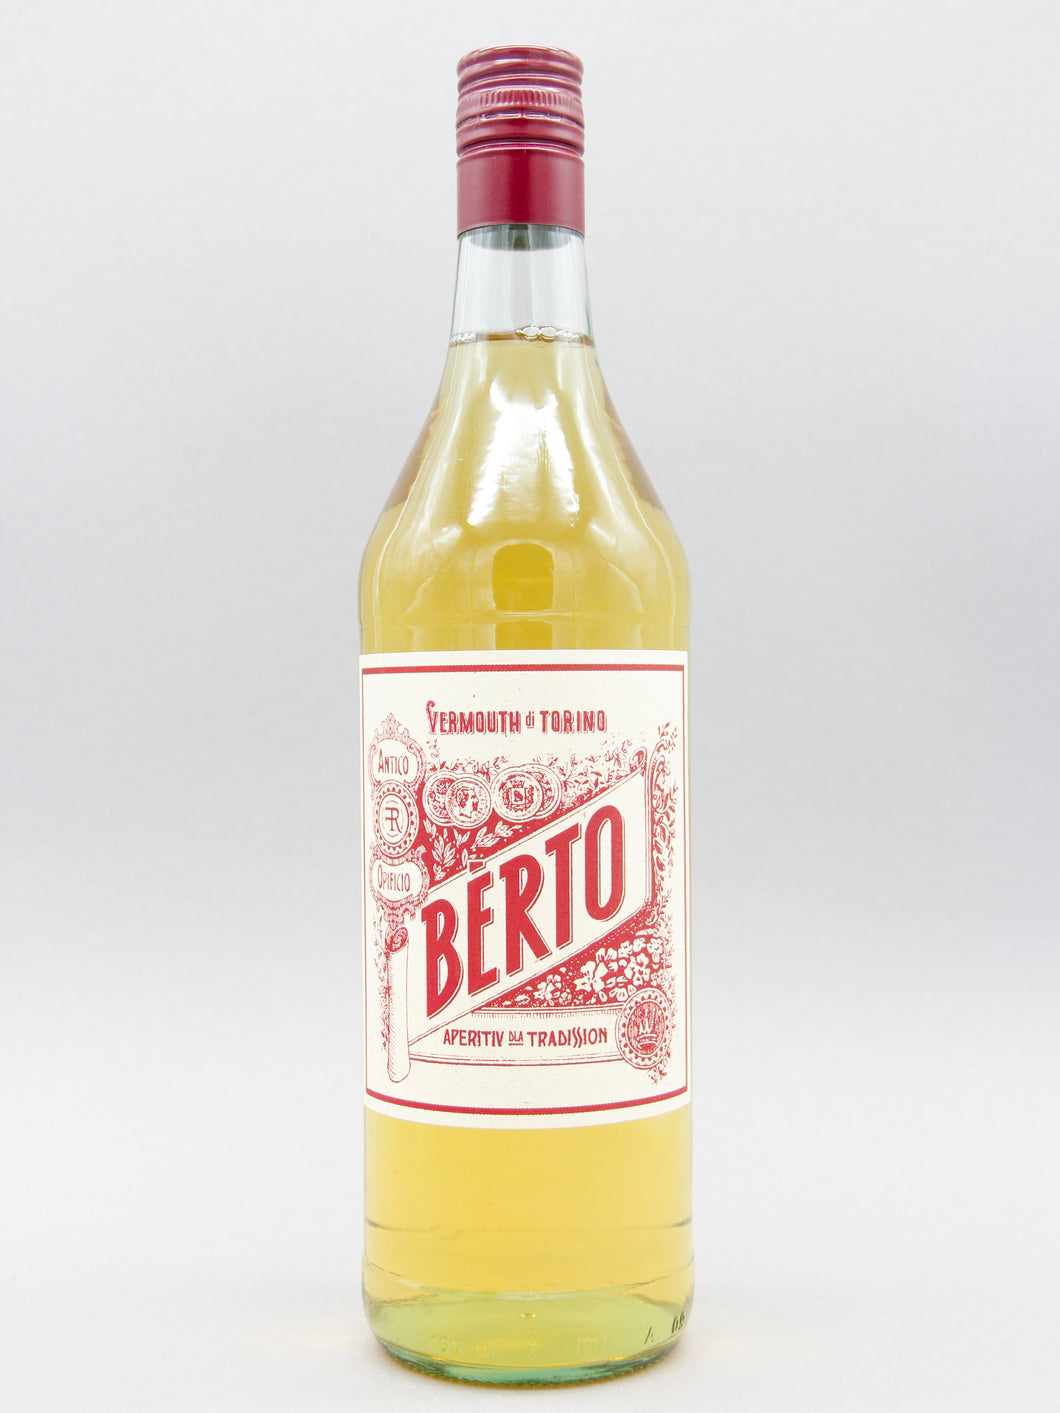 Berto Bianco Vermouth Aperitiv Dla Tradission, Piemonte, Italy (17%, 100cl)